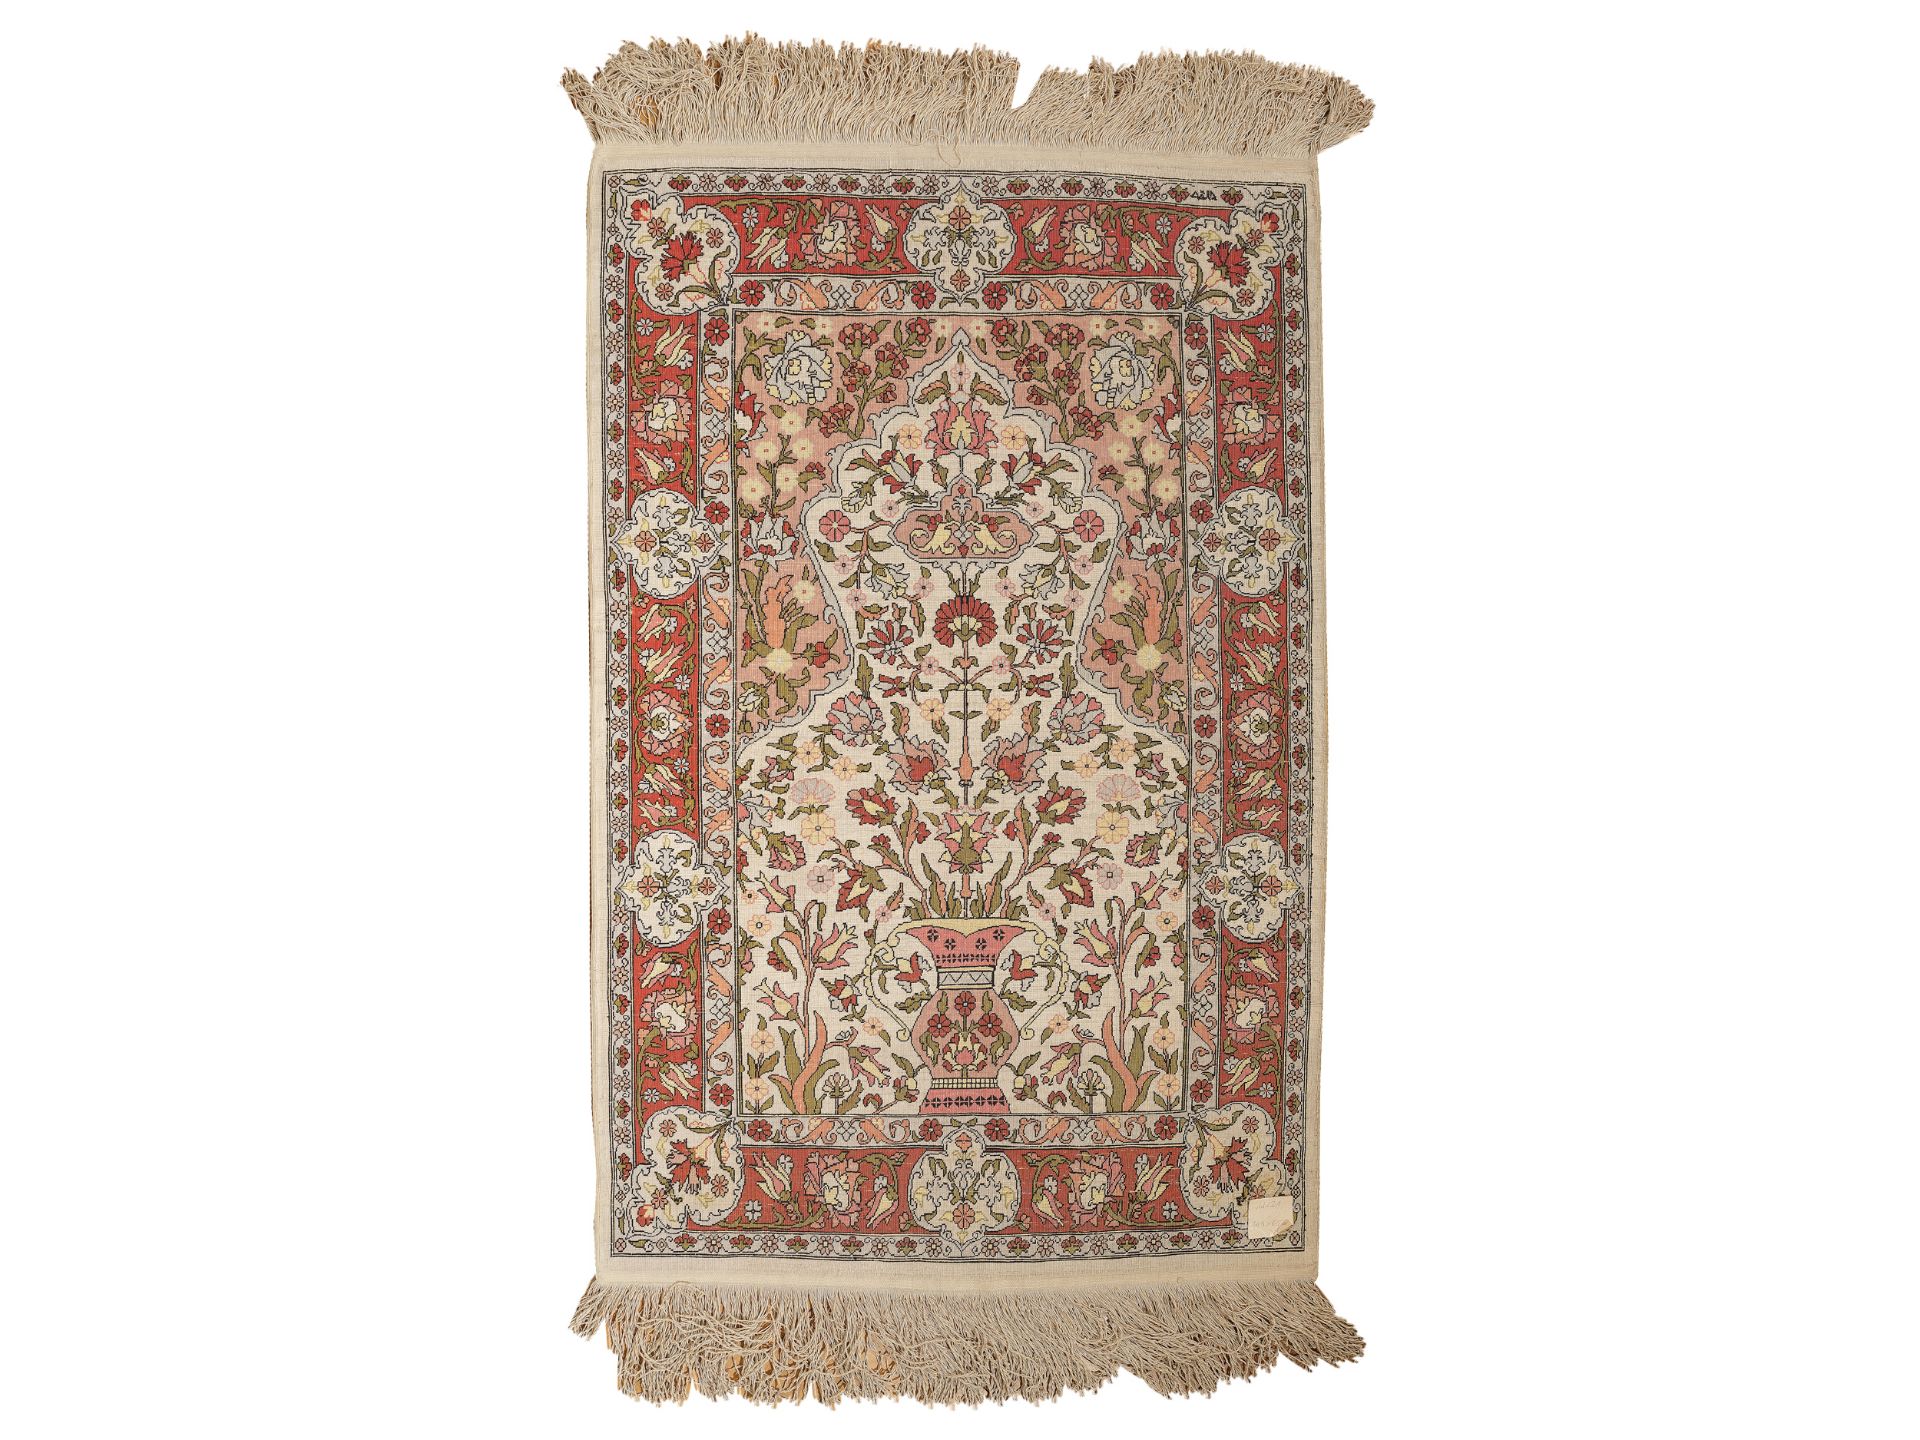 Silk carpet - Image 2 of 2